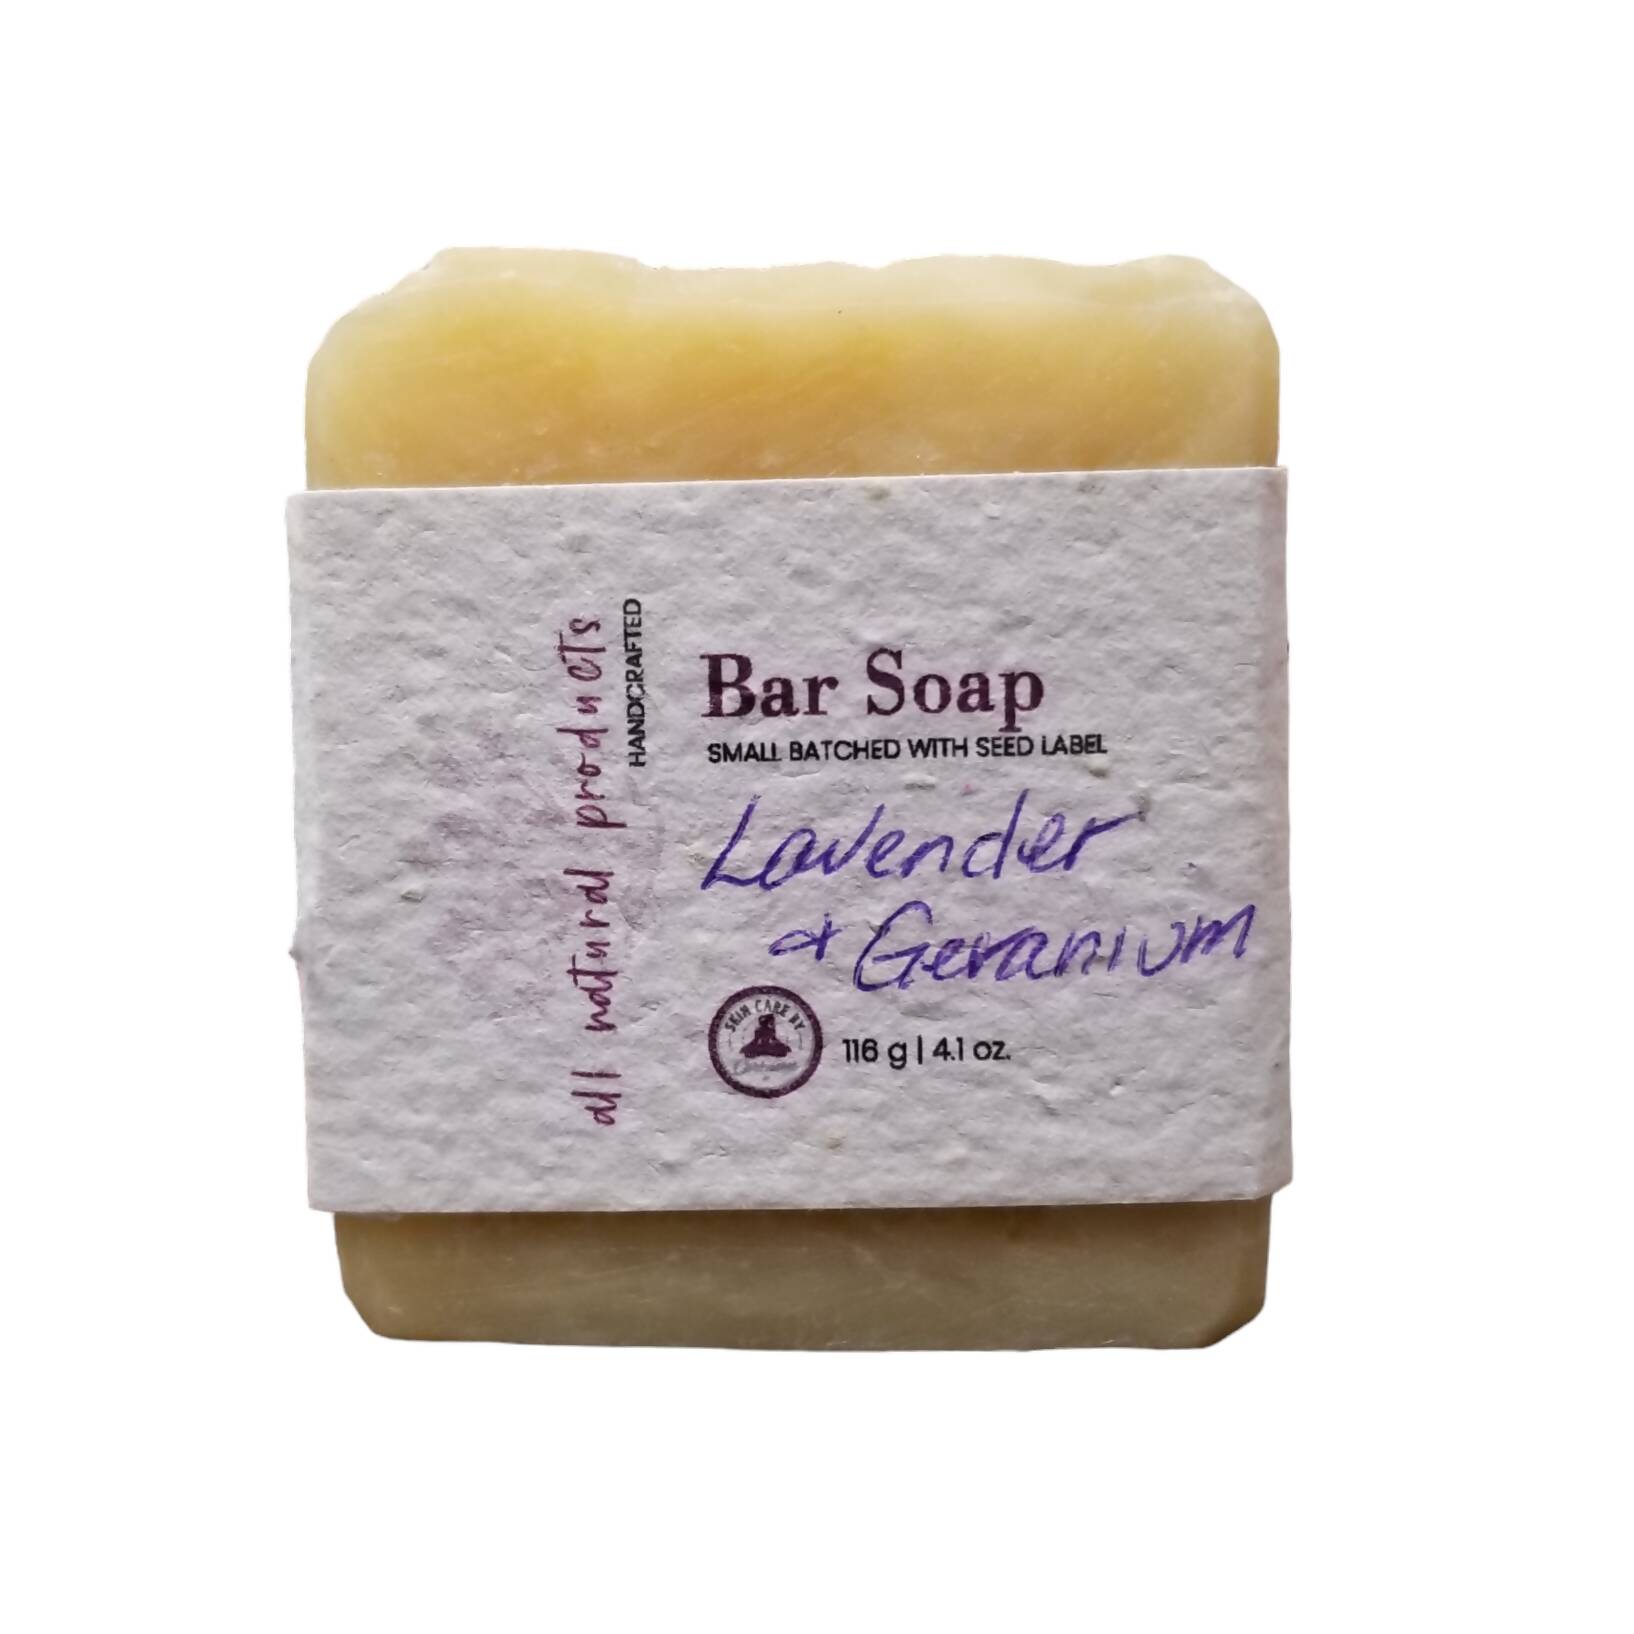 Lavender & Geranium Bar Soap